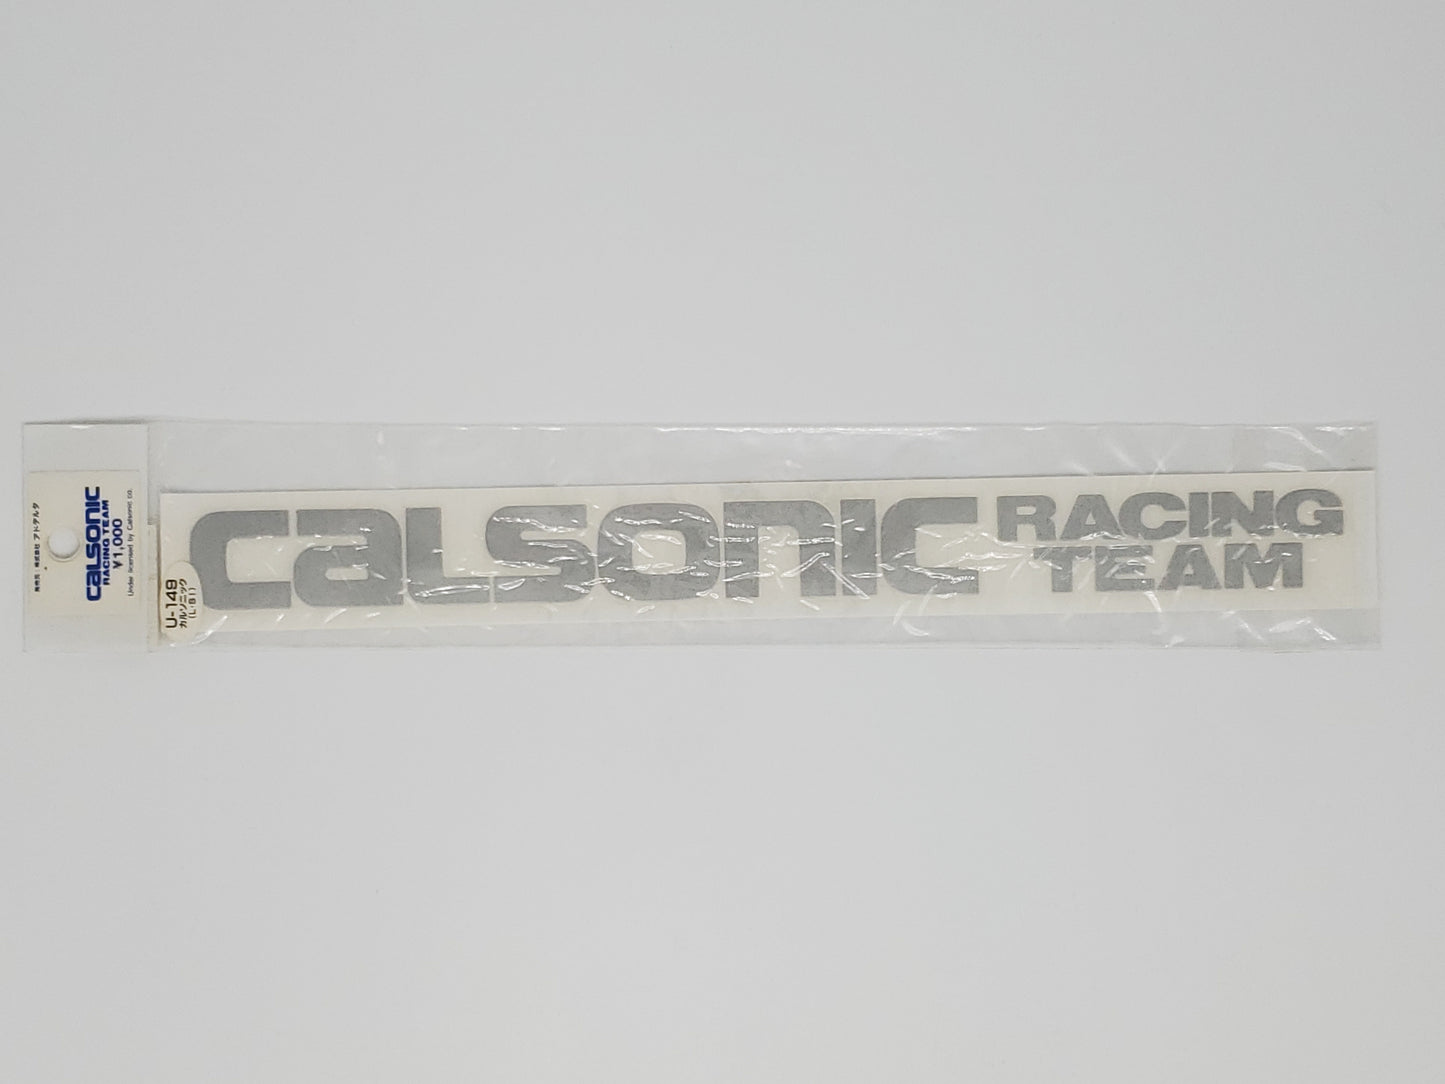 Calsonic Racing Team Sticker